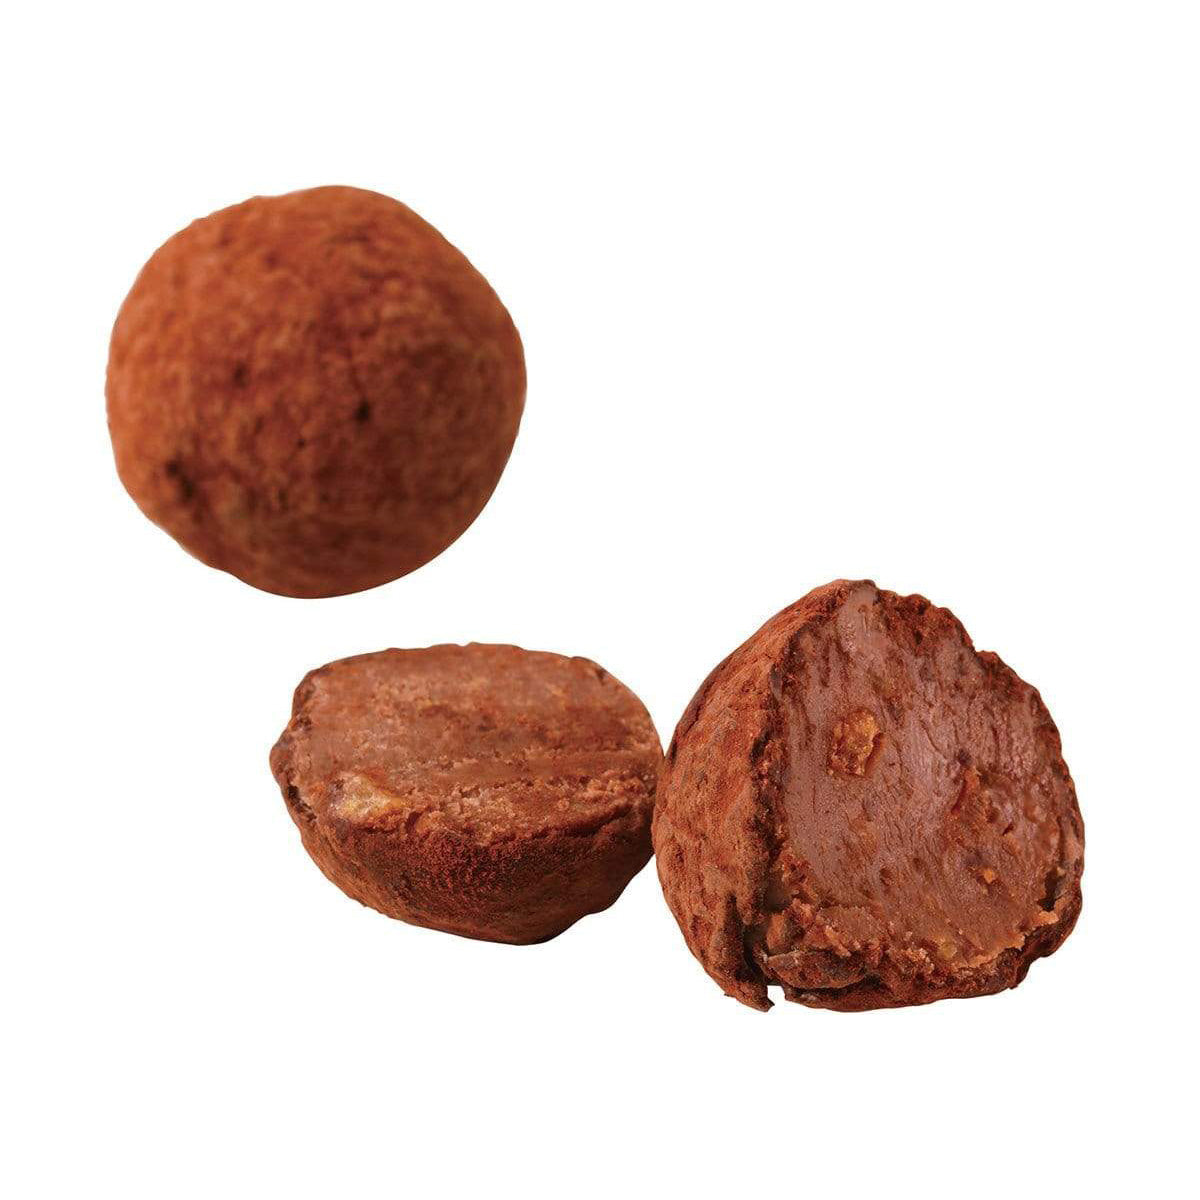 ROYCE' Chocolate - Petite Truffe "Orange" - Image shows brown chocolate balls on a white surface.